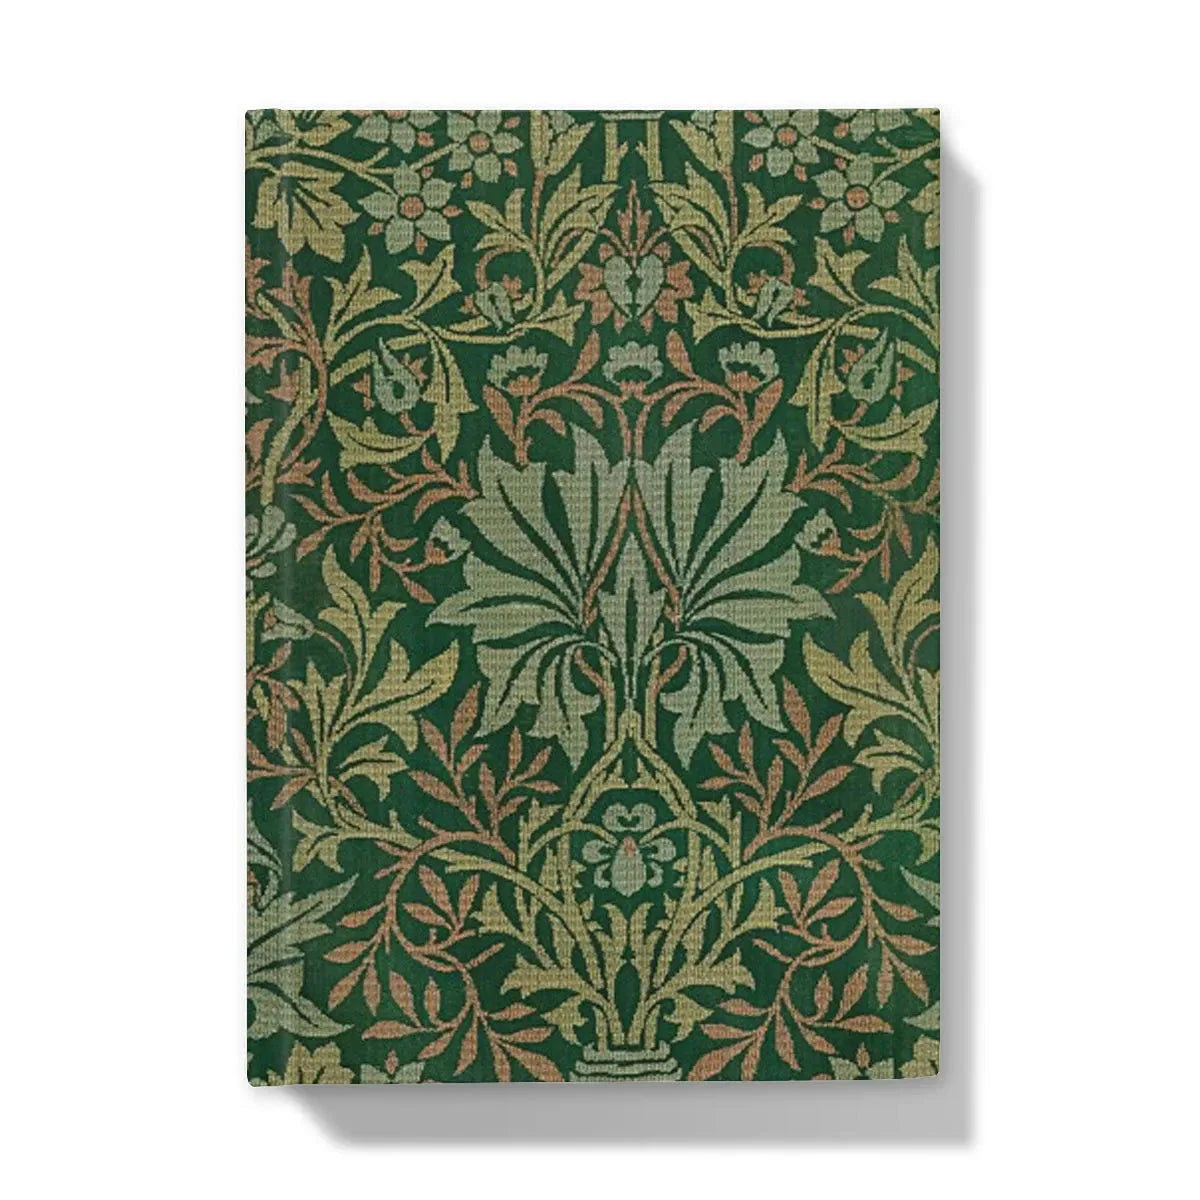 Flower Garden By William Morris Hardback Journal - 5’x7’ / 5’ x 7’ - Lined Paper - Notebooks & Notepads - Aesthetic Art